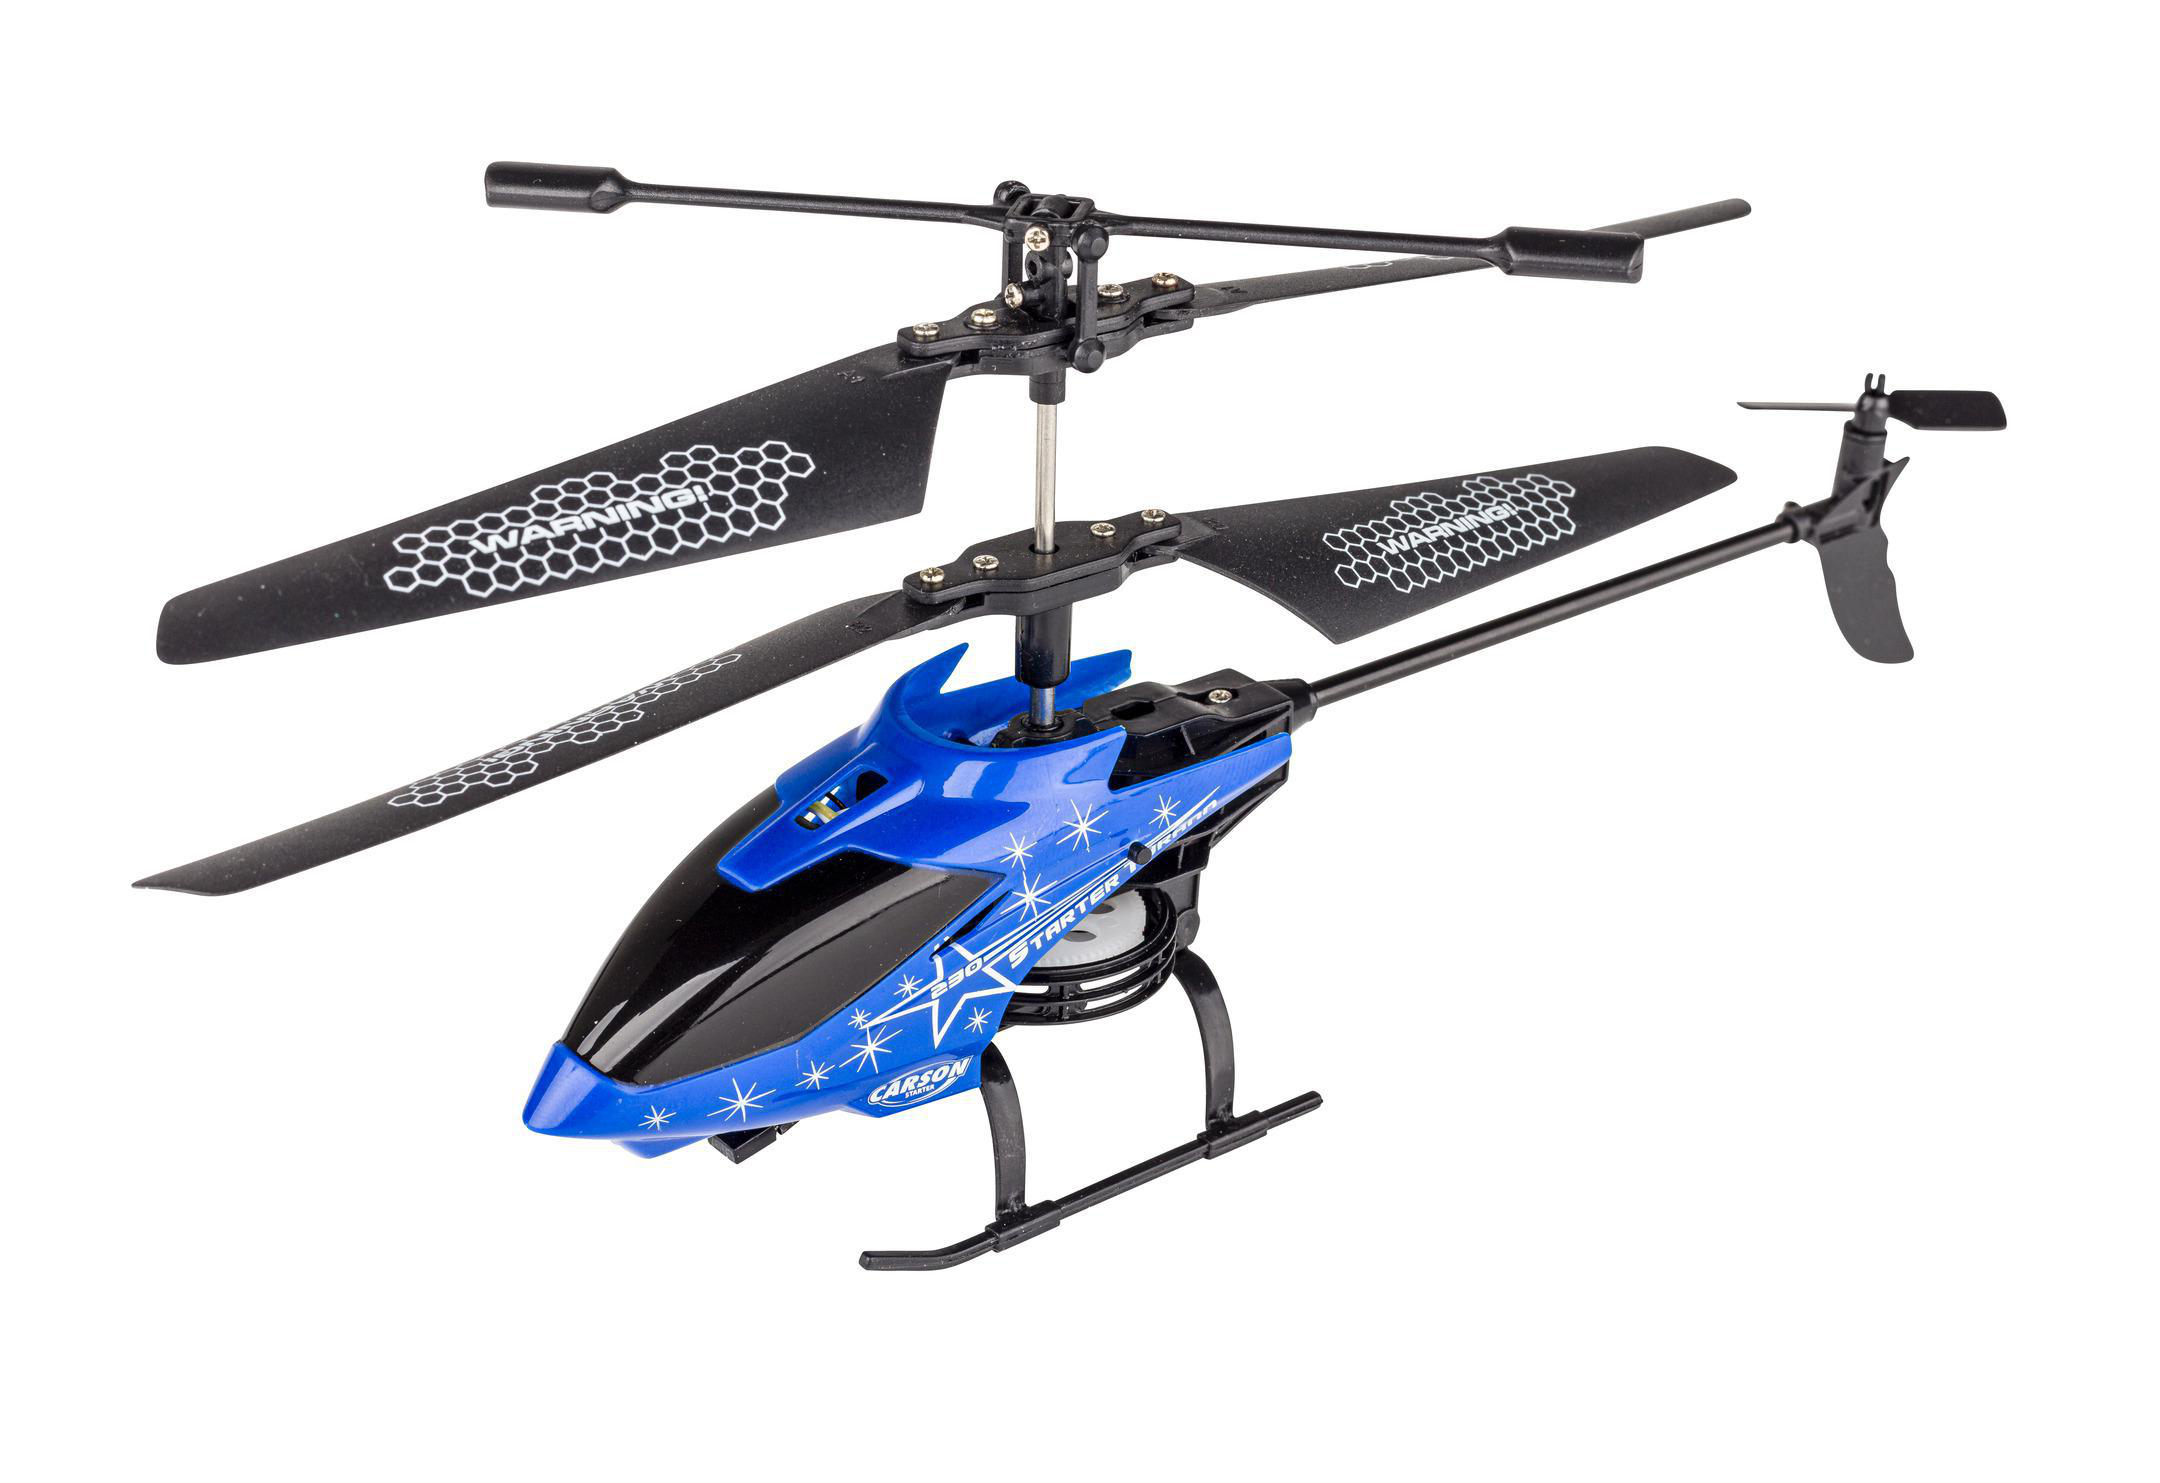 Starter Blau 230 Helikopter Tyrann R/C Spielzeughelikopter, RTF IR night CARSON ferngesteuerter blue, 2Ch